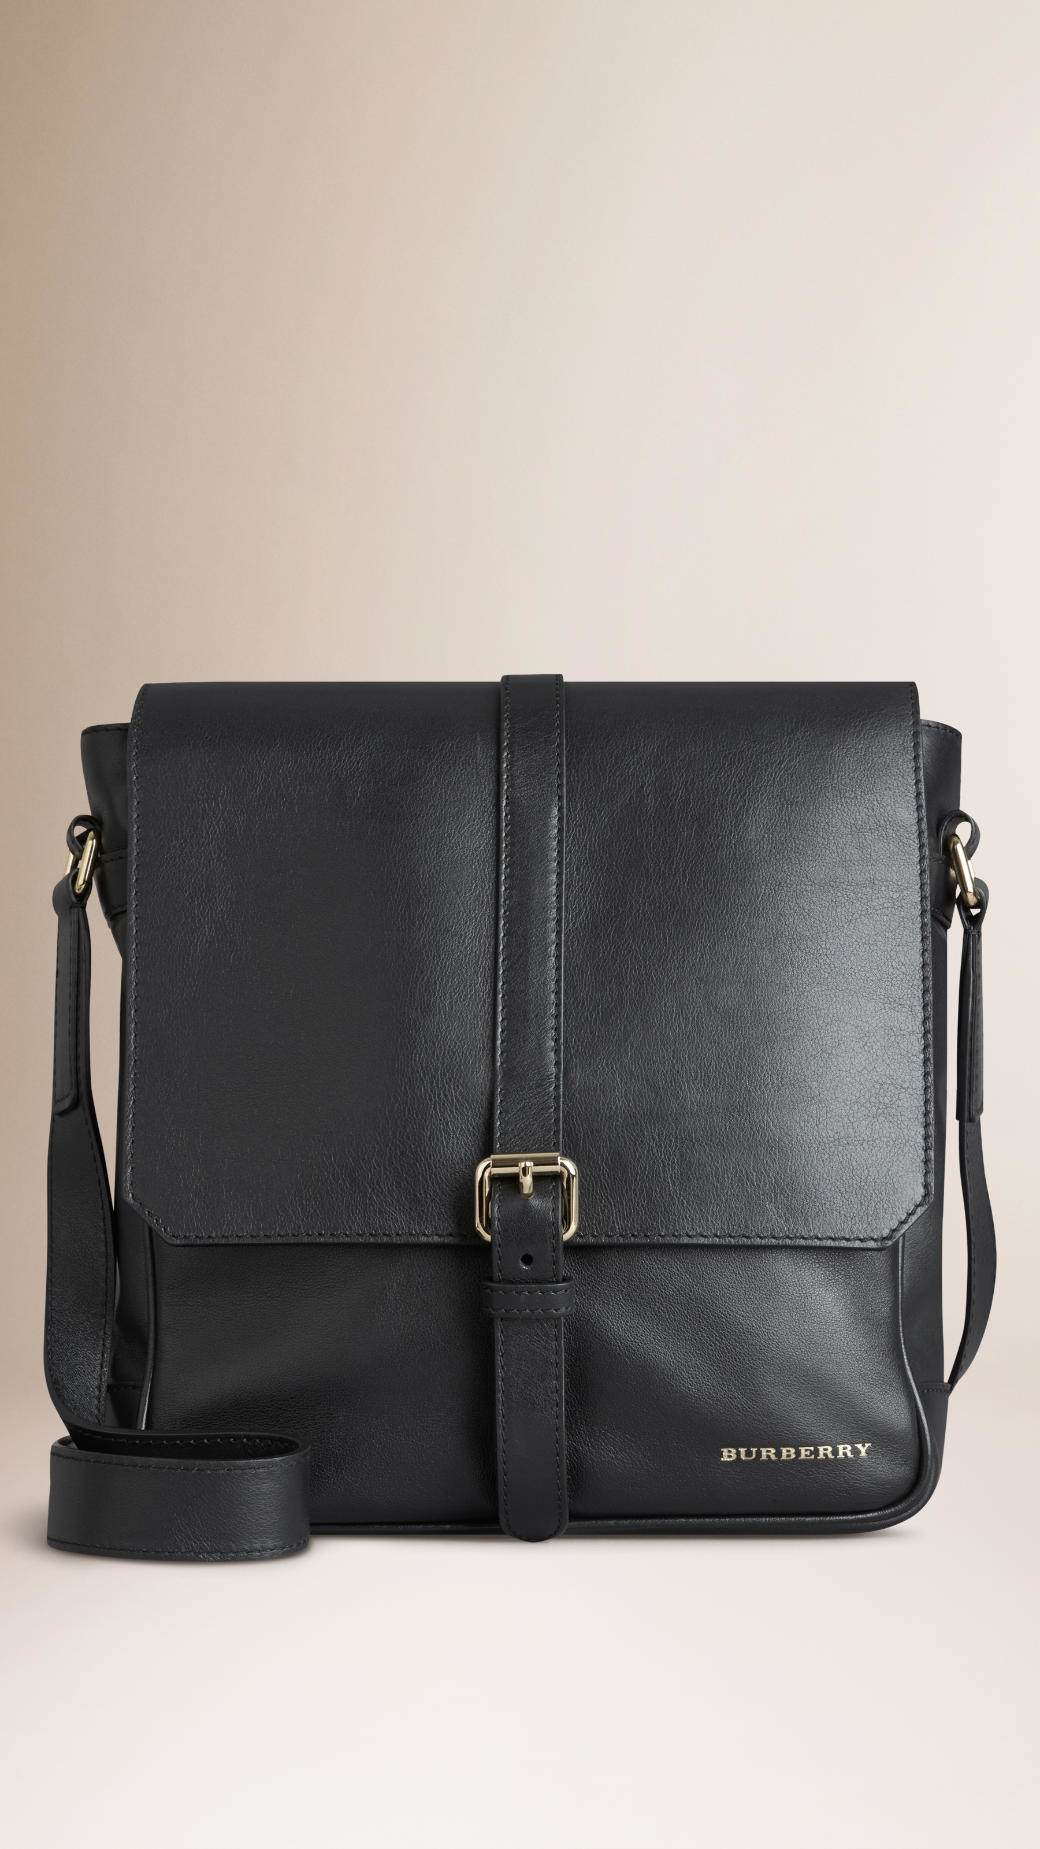 Burberry Soft Leather Crossbody Bag in Black for Men - Lyst